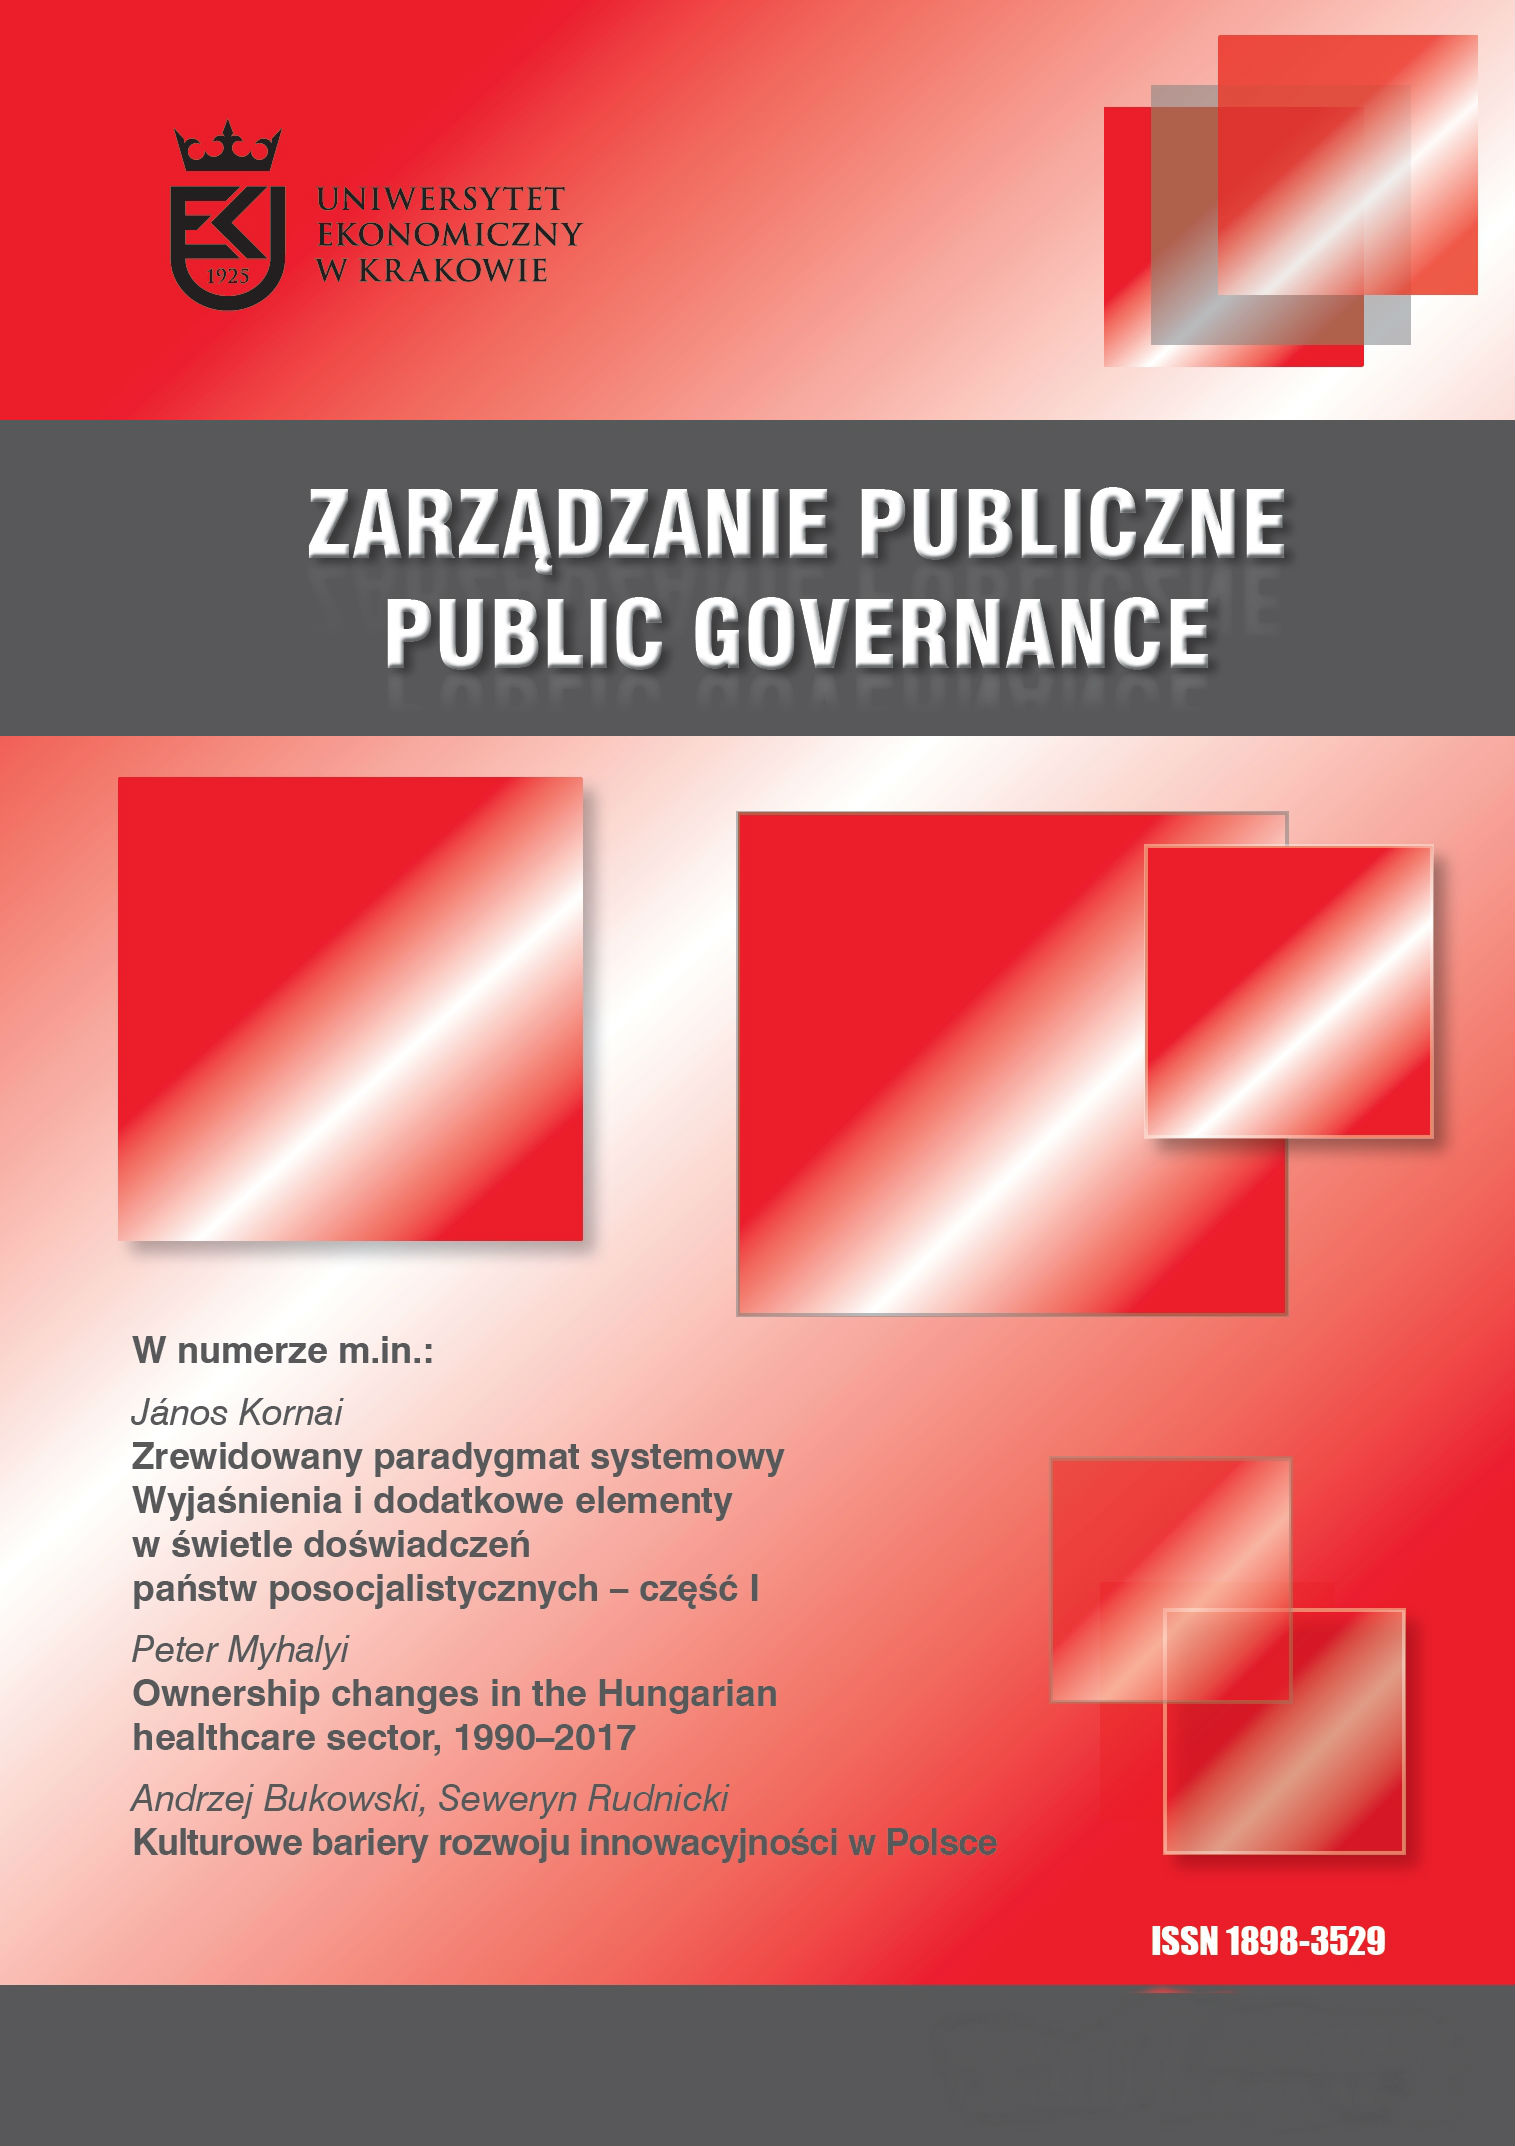 PUBLIC MANAGEMENT – DELIBERATIONS CONCERNING BOUNDARIES Cover Image